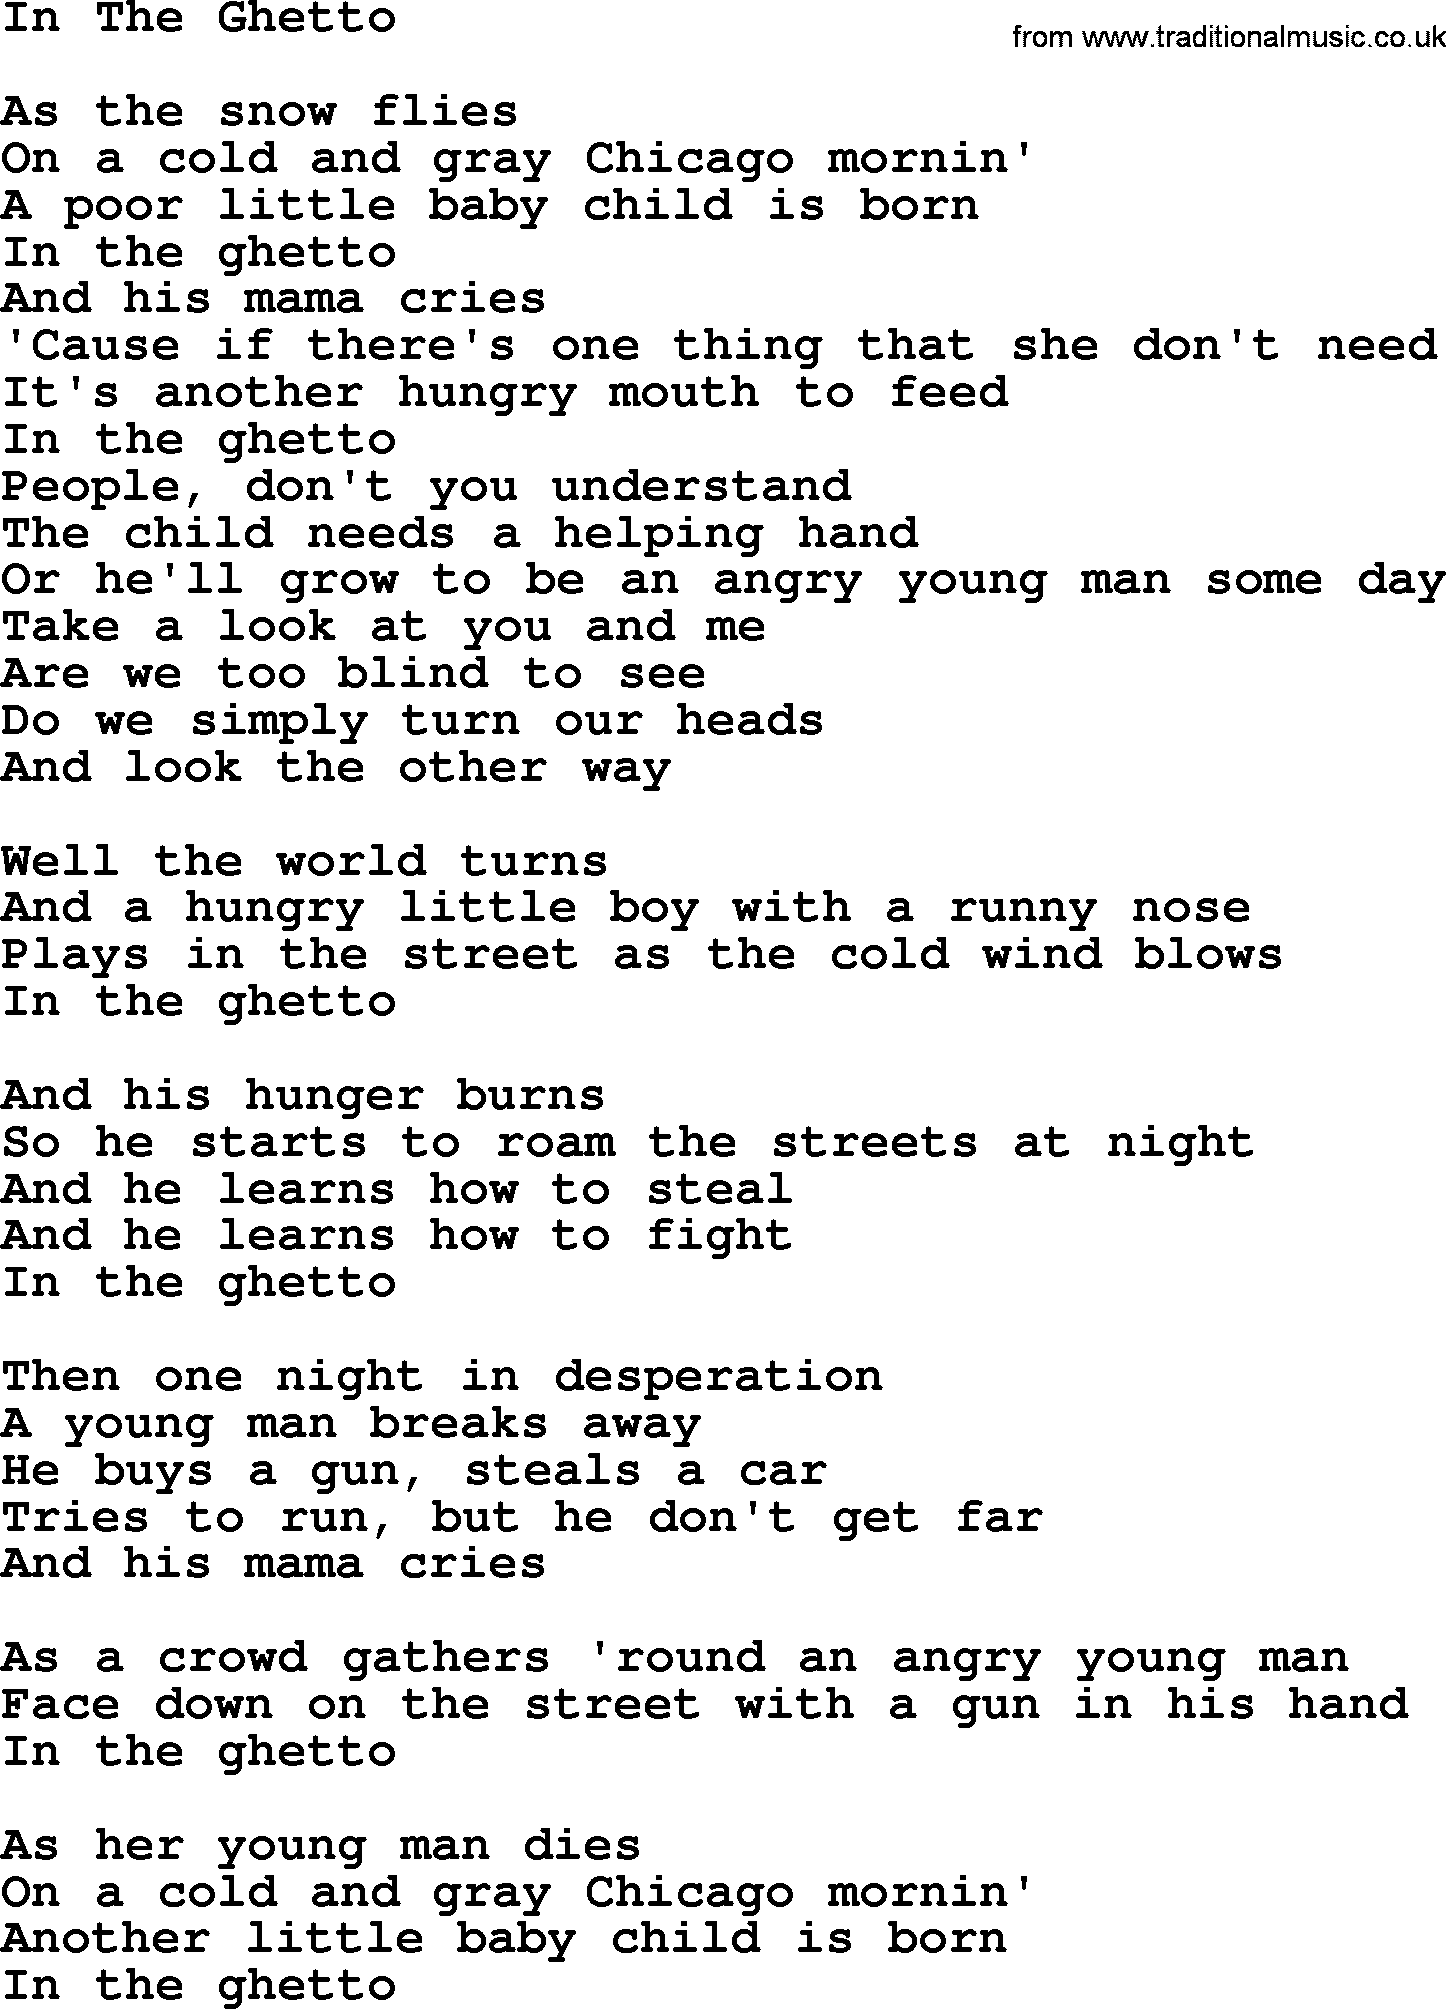 Dolly Parton song In The Ghetto.txt lyrics